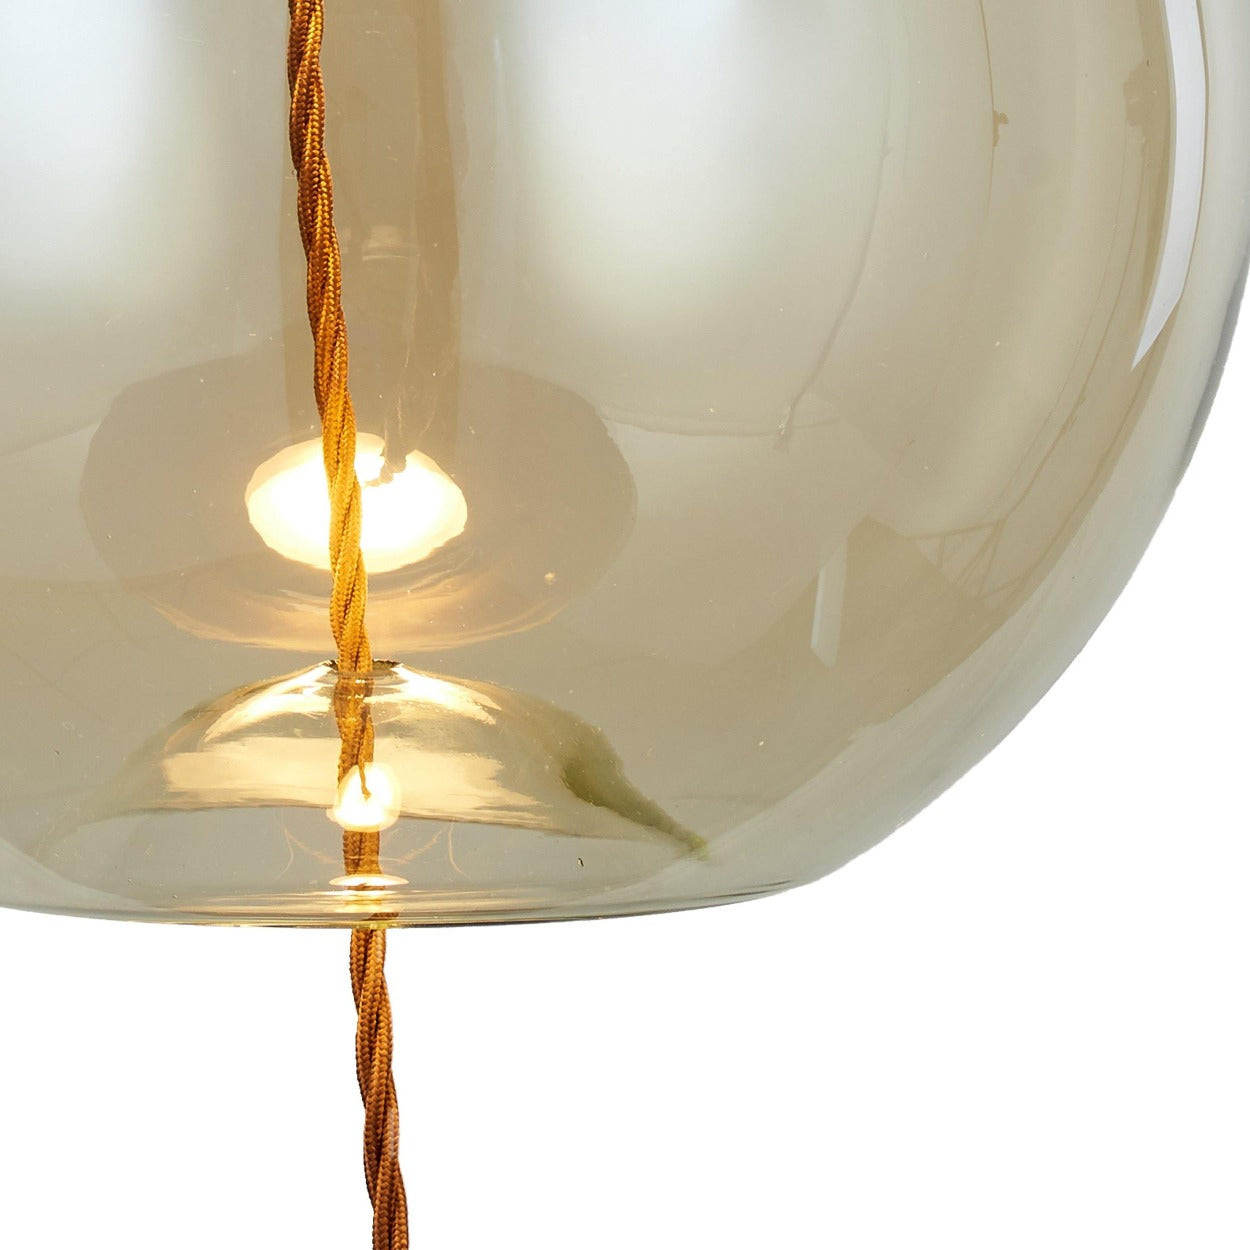 ANKUR BALI ROUND GLASS LED HANGING LIGHT - Ankur Lighting